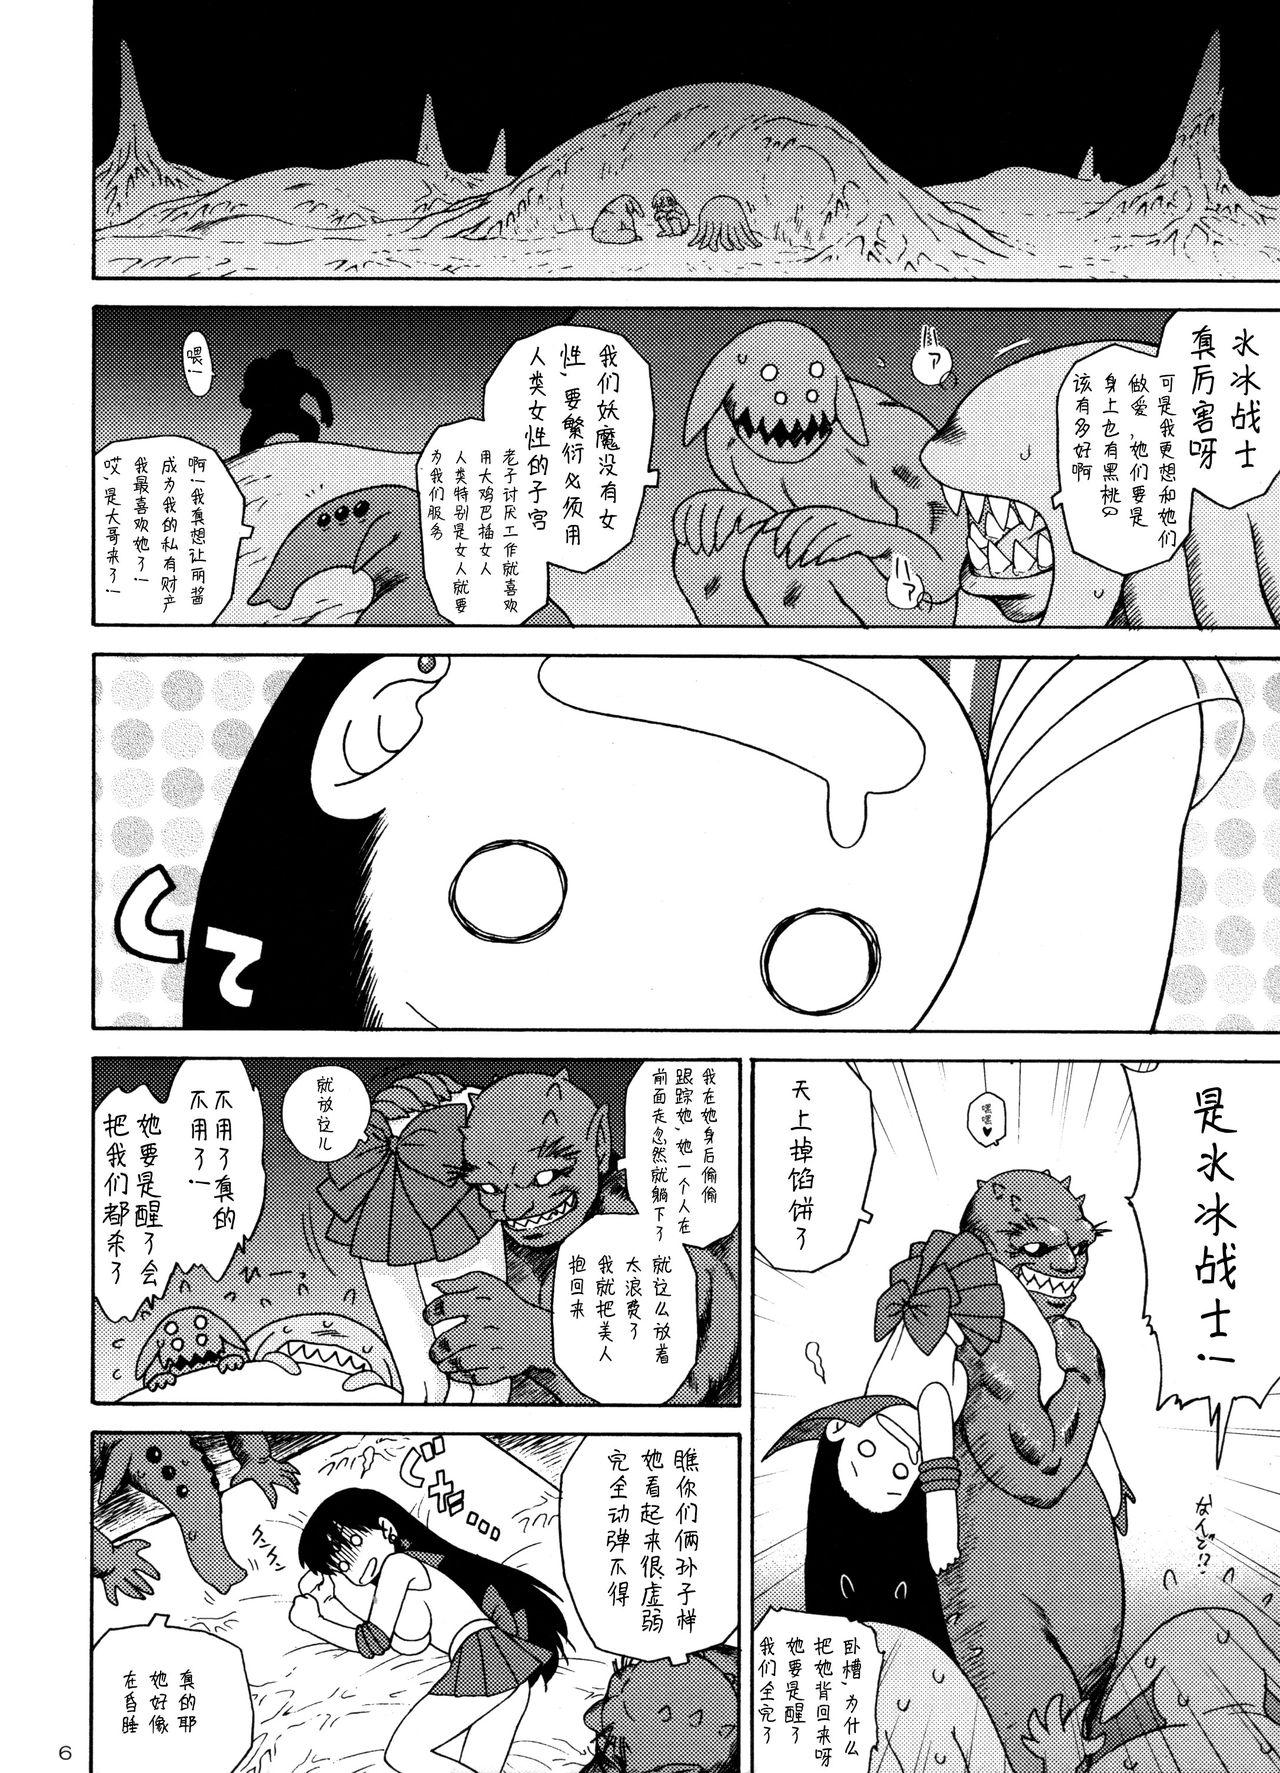 Behind QUEEN OF SPADES - 黑桃皇后 - Sailor moon Muscular - Page 9